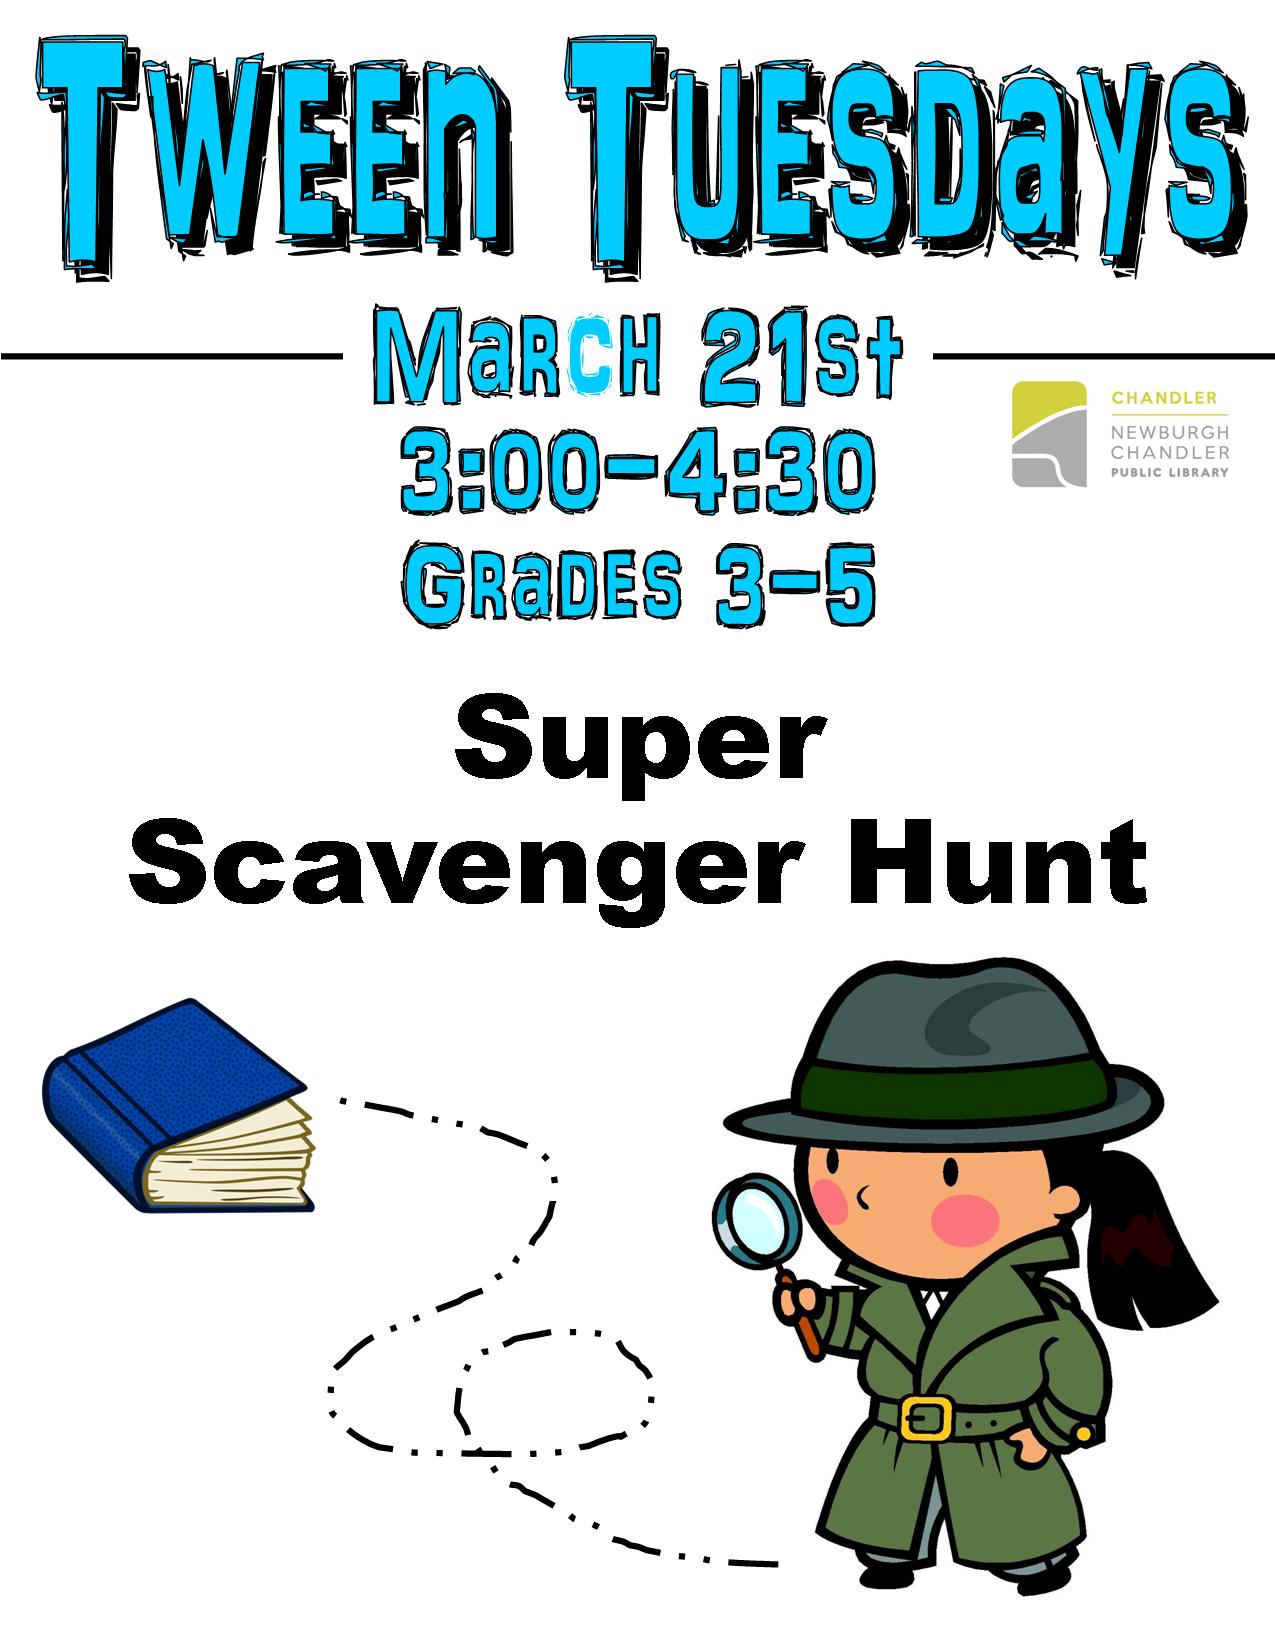 Tween Tuesdays: Super Scavenger Hunt @ Chandler Library Children's Department | Chandler | Indiana | United States